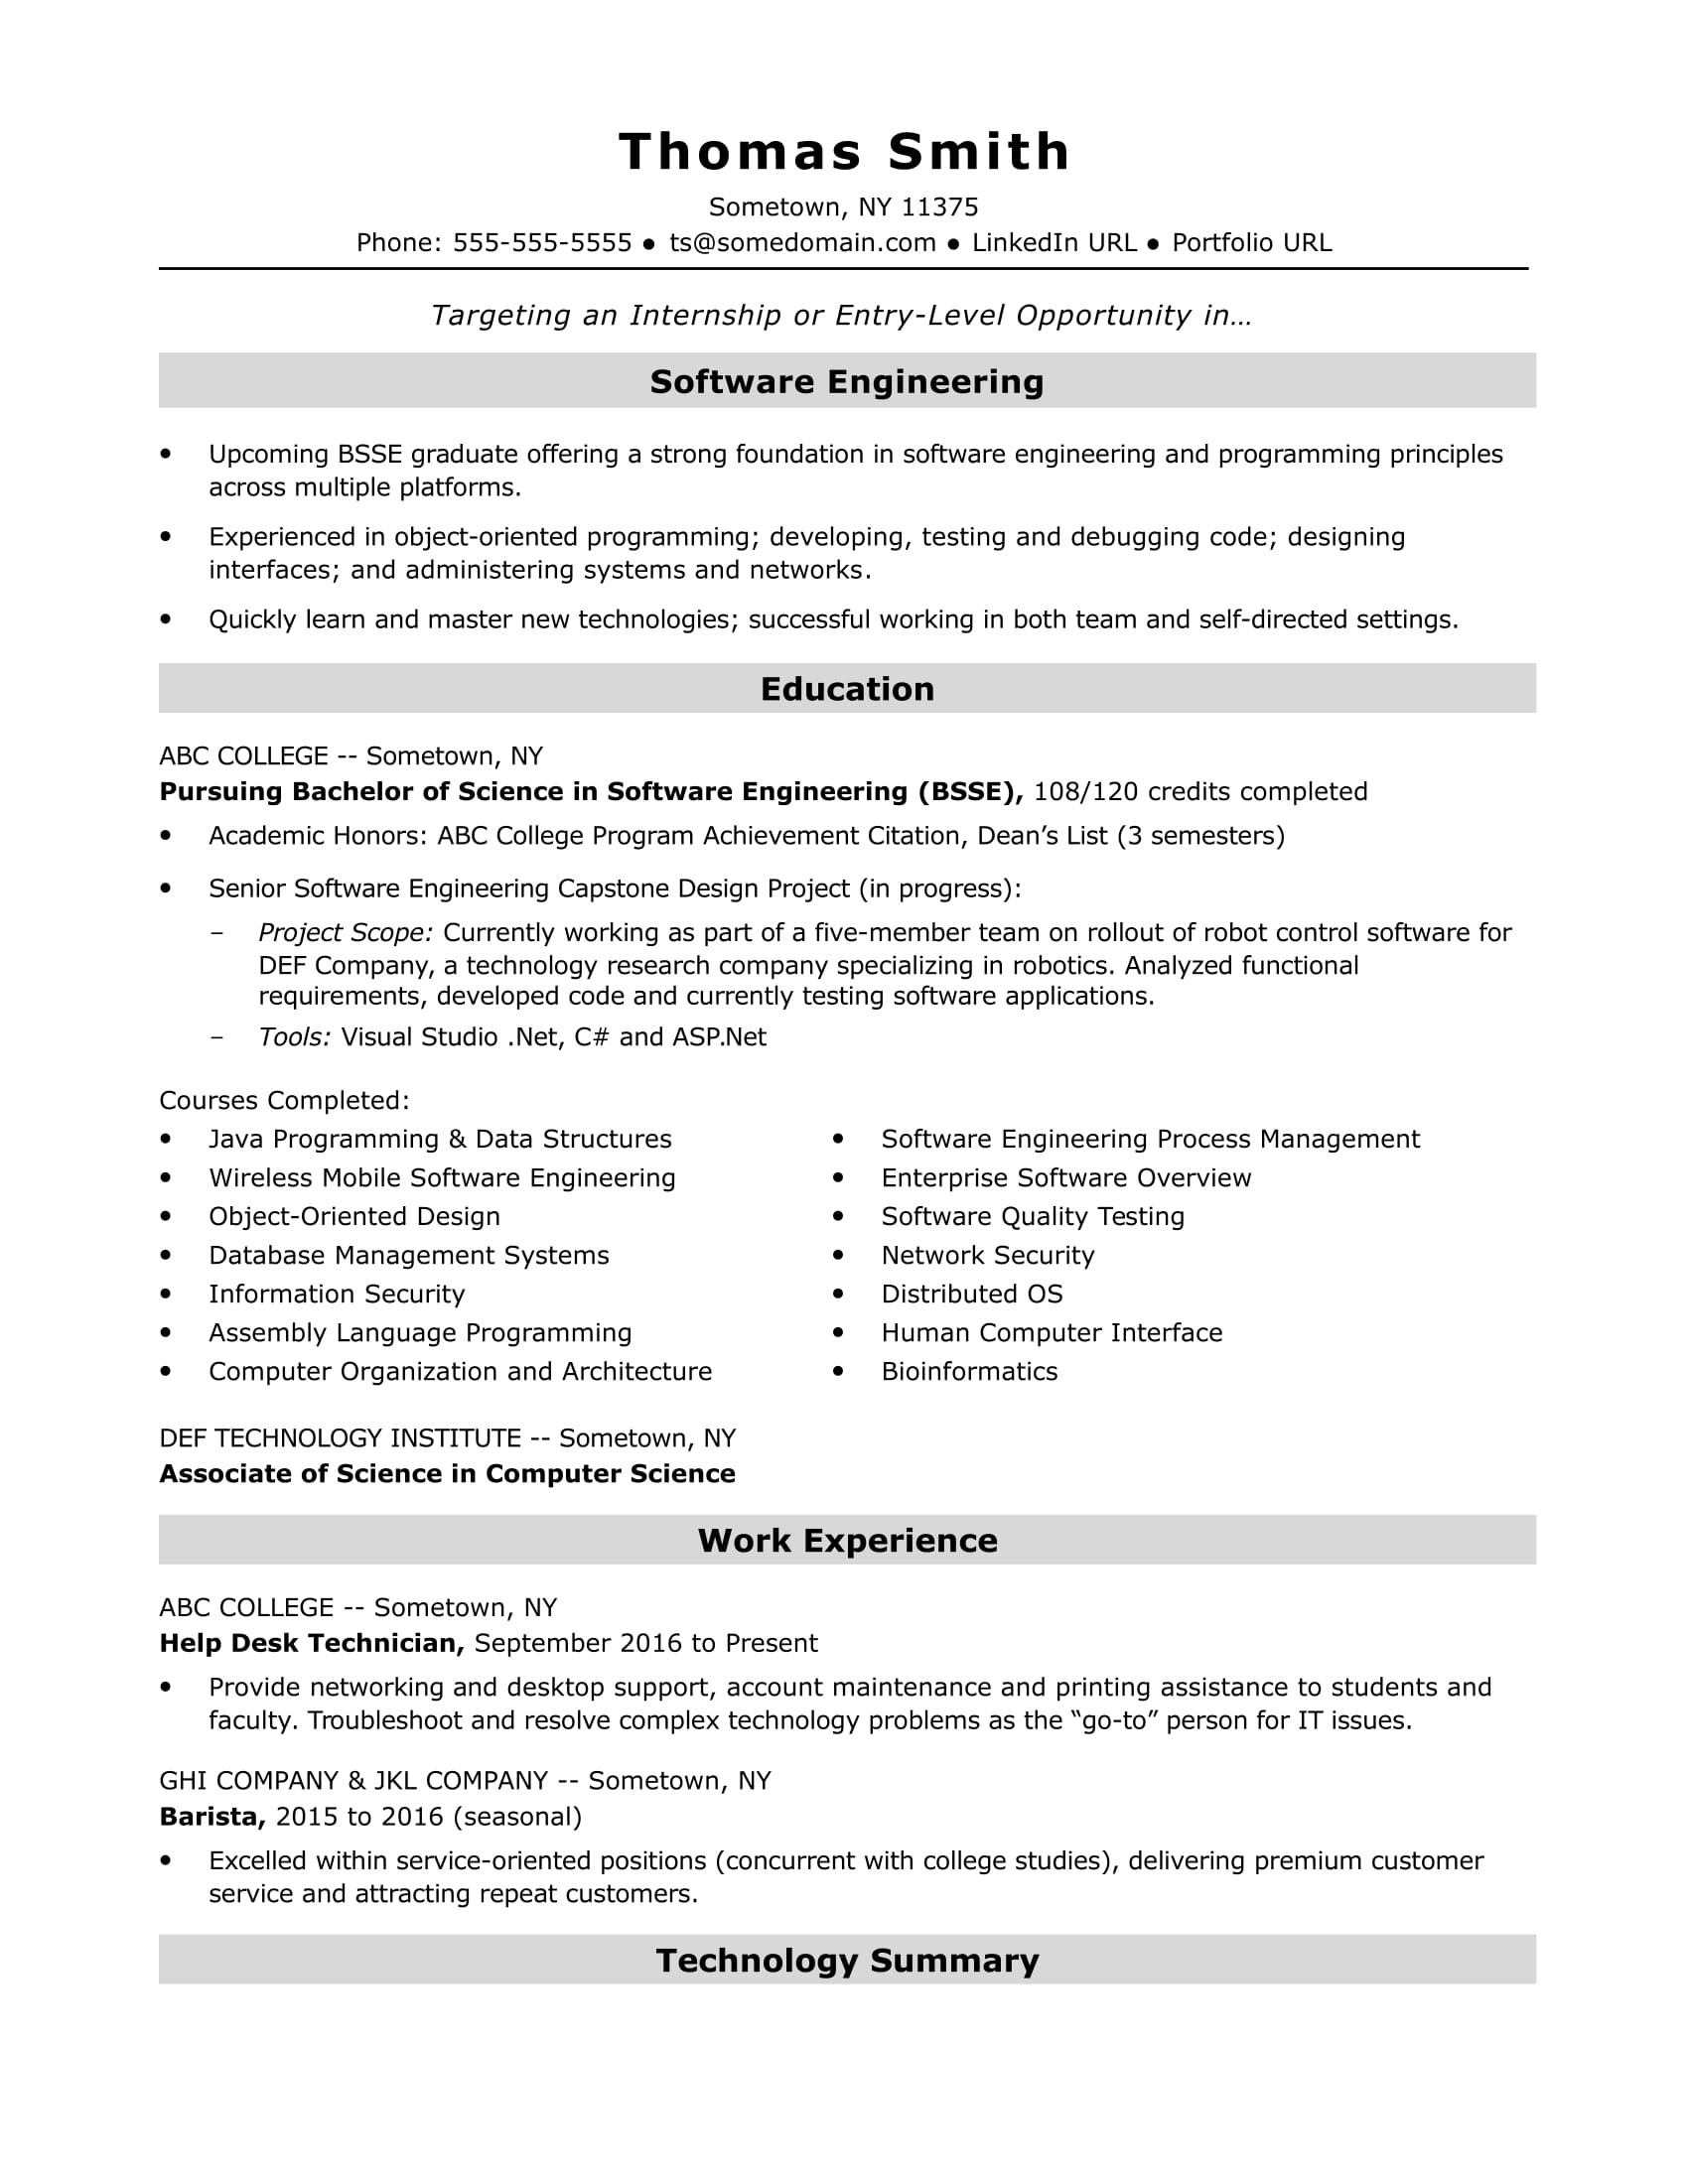 Professional Resume Samples for software Engineers Entry-level software Engineer Resume Sample Monster.com